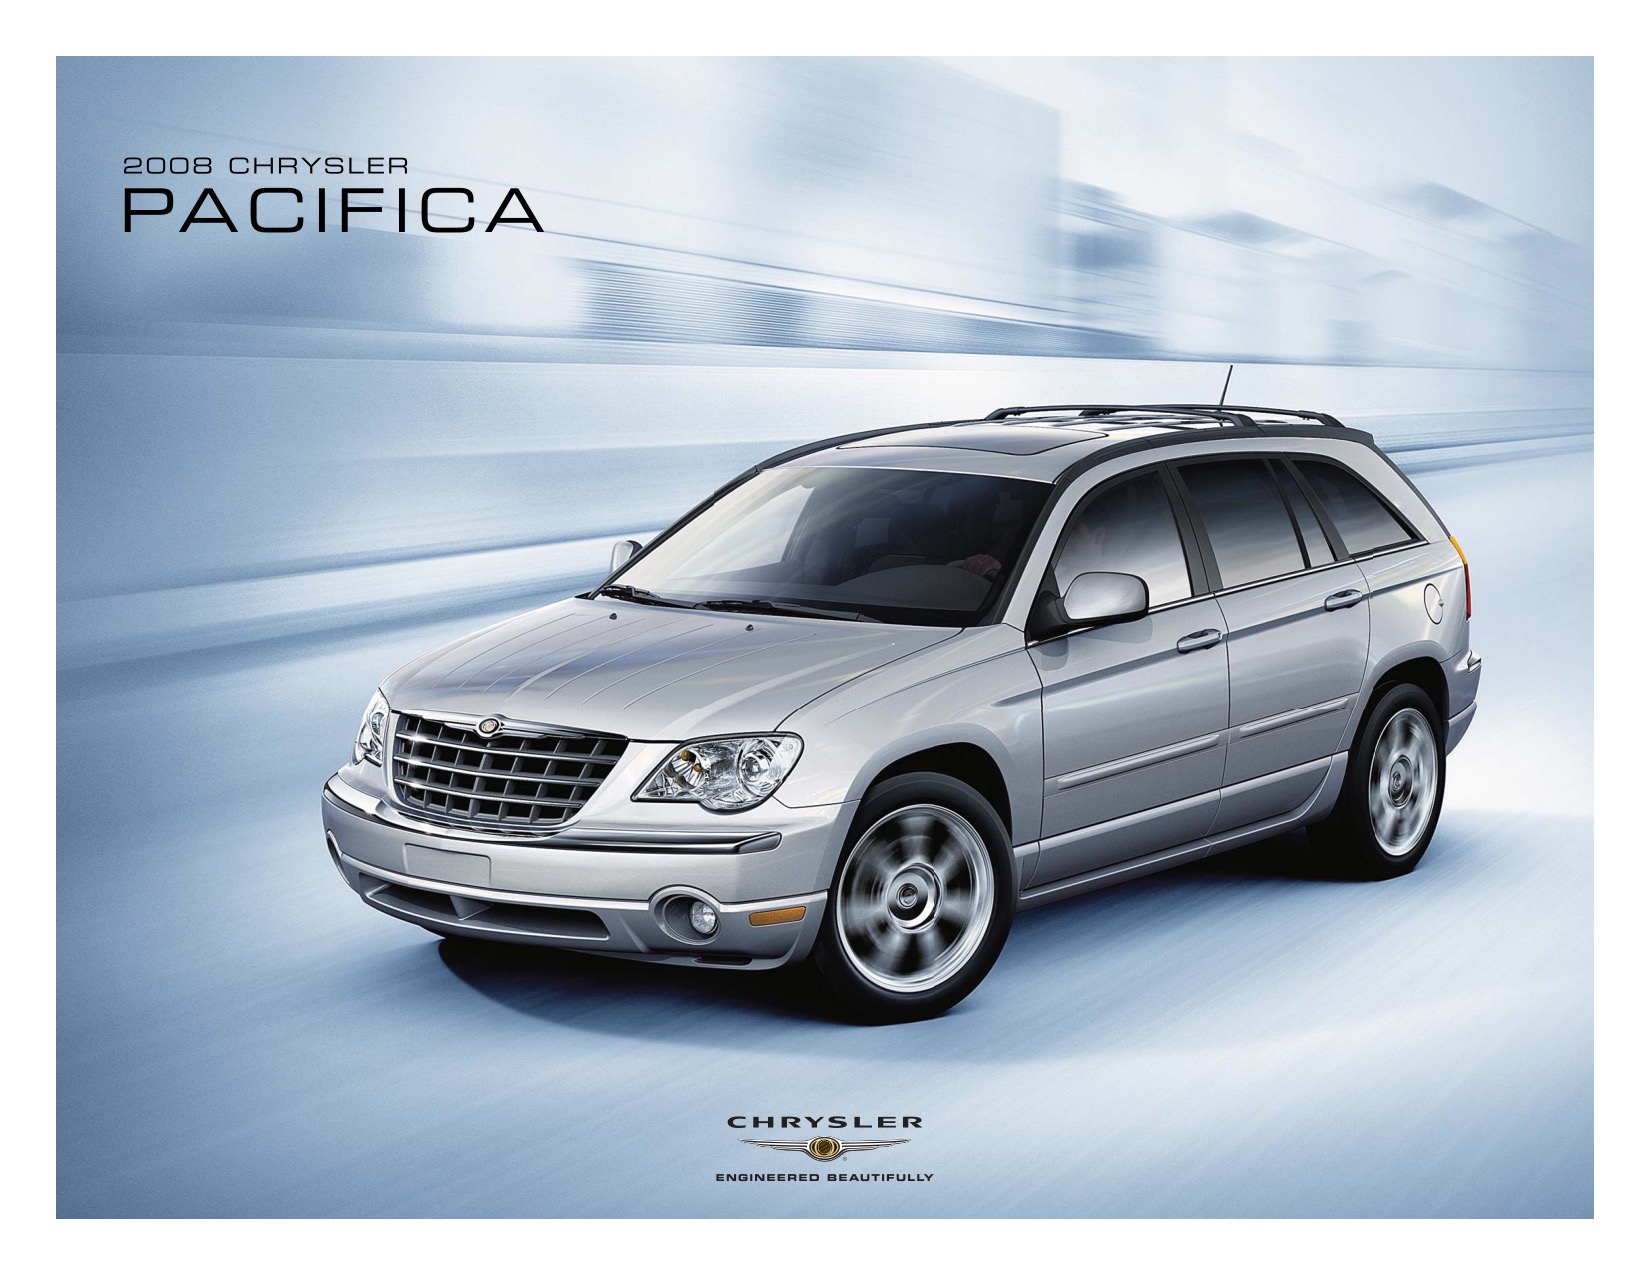 2008 Chrysler Pacifica Brochure